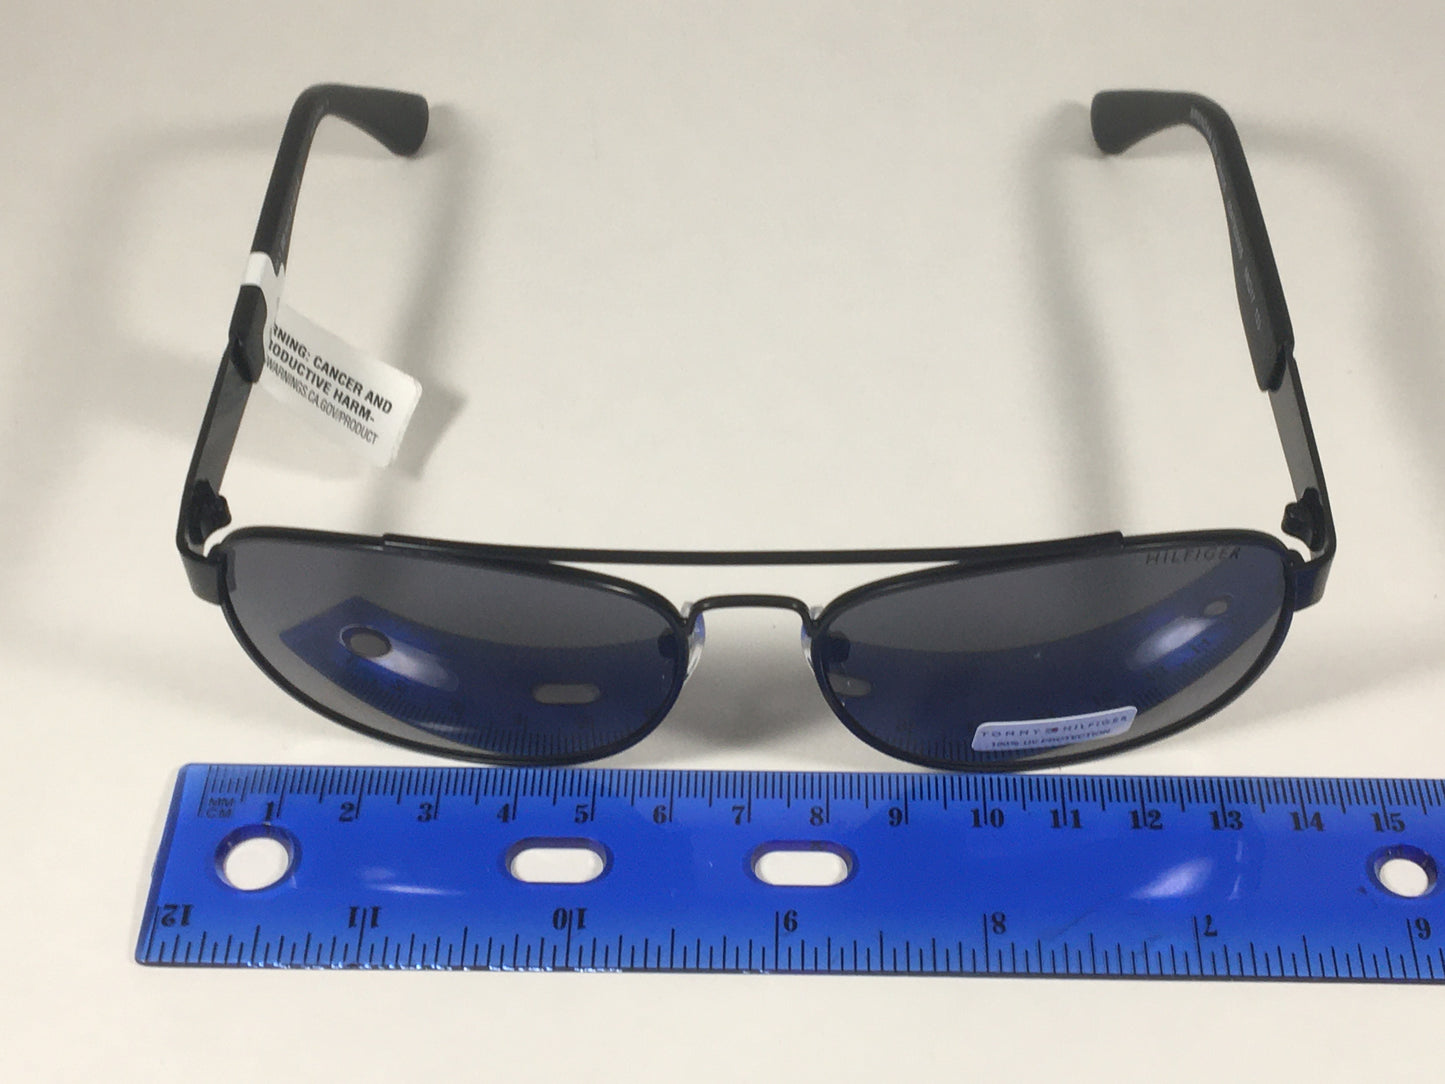 Tommy Hilfiger Brendan Rectangular Sunglasses Matte Black Gray Lens BRENDAN MM OM435 - Sunglasses